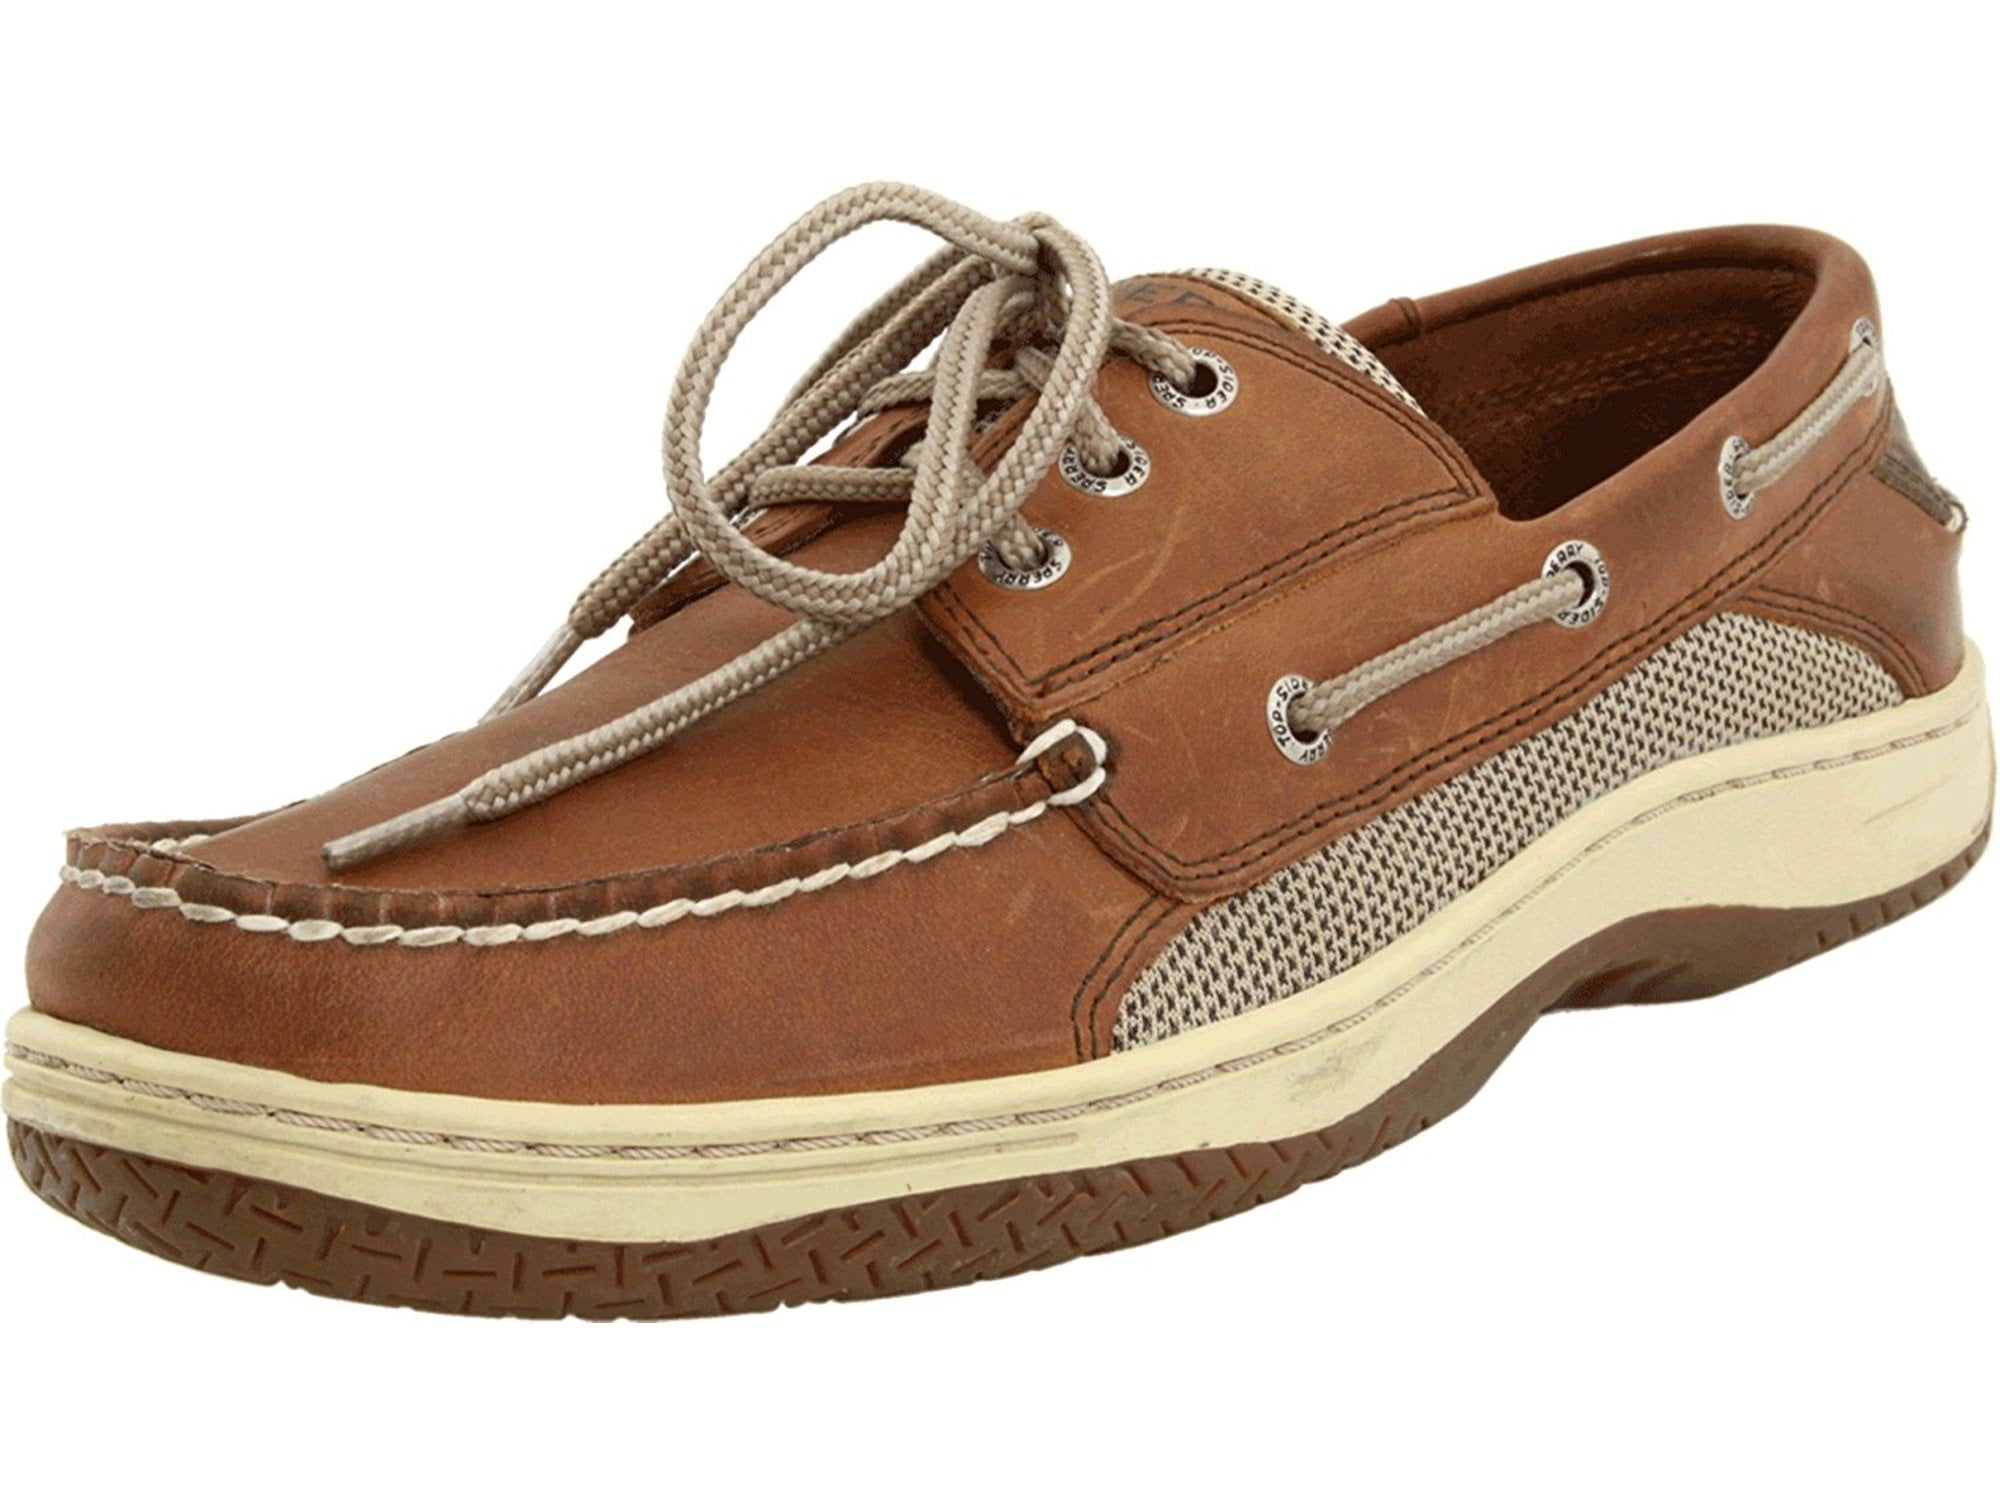 Sperry Men's Billfish 3-Eye Boat Shoe, Dark Tan, 11 M US | Walmart Canada